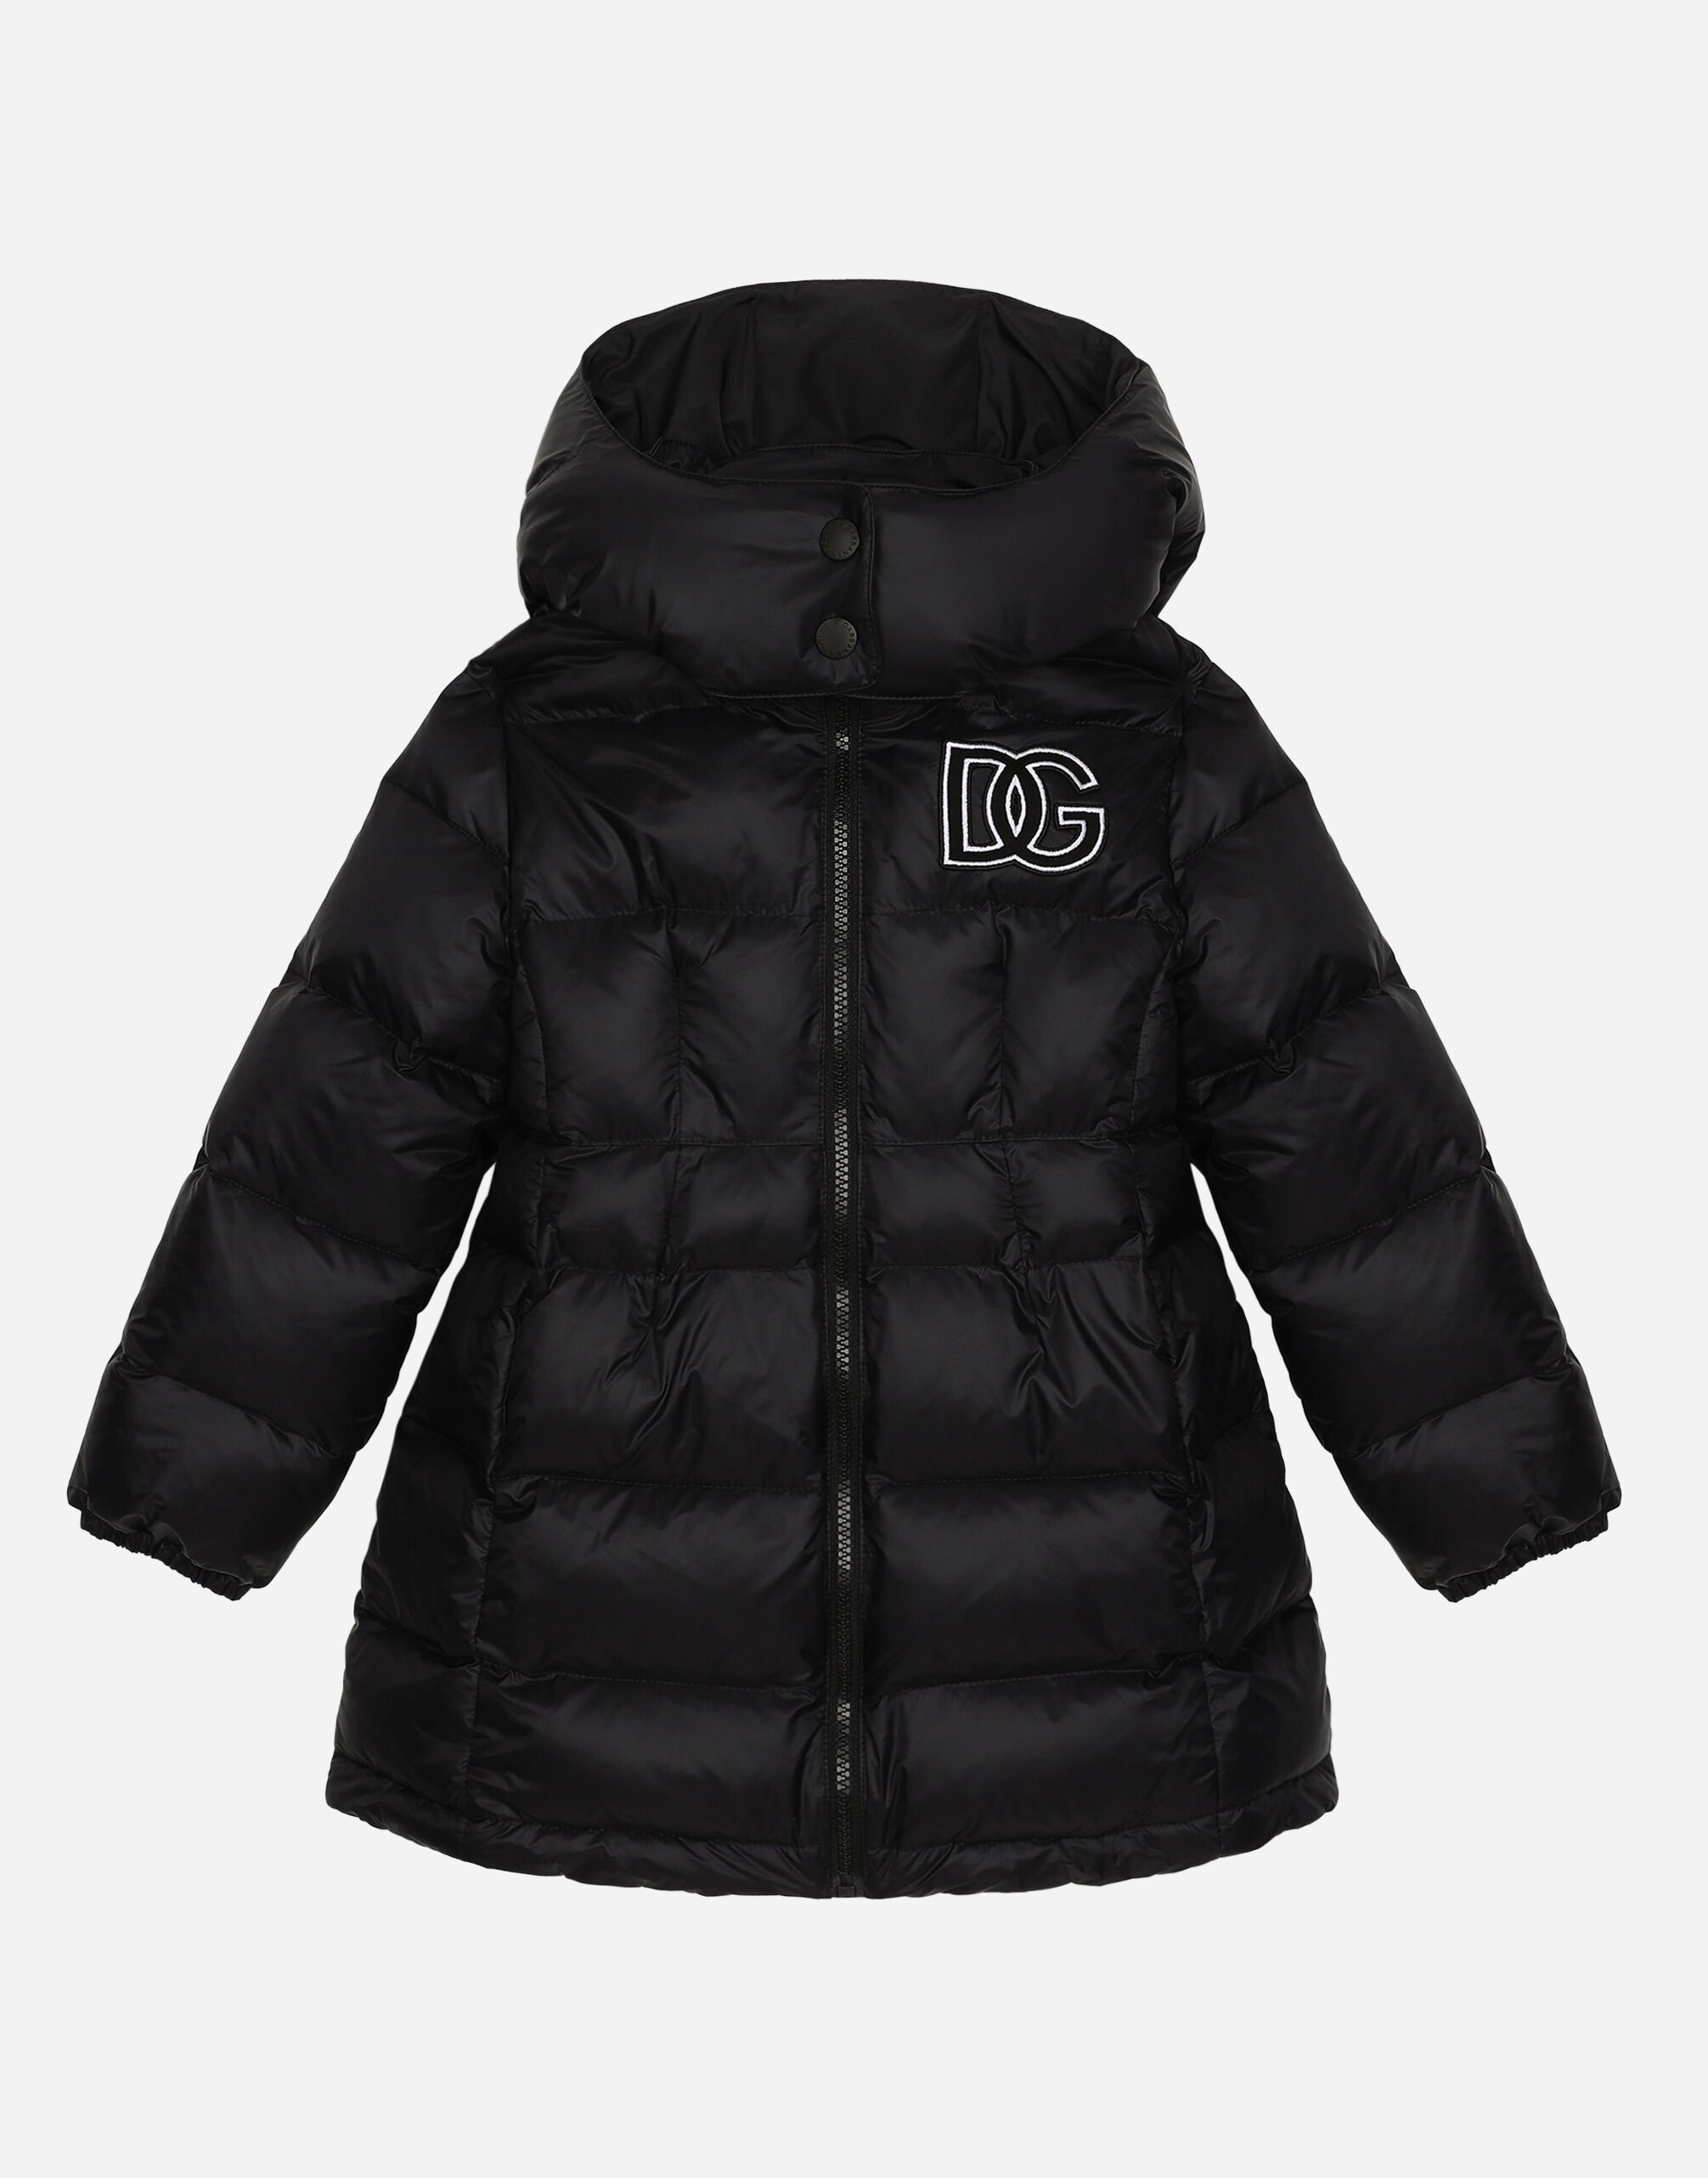 Dolce&Gabbana Nylon down jacket with DG logo Black L54C45G7K5C